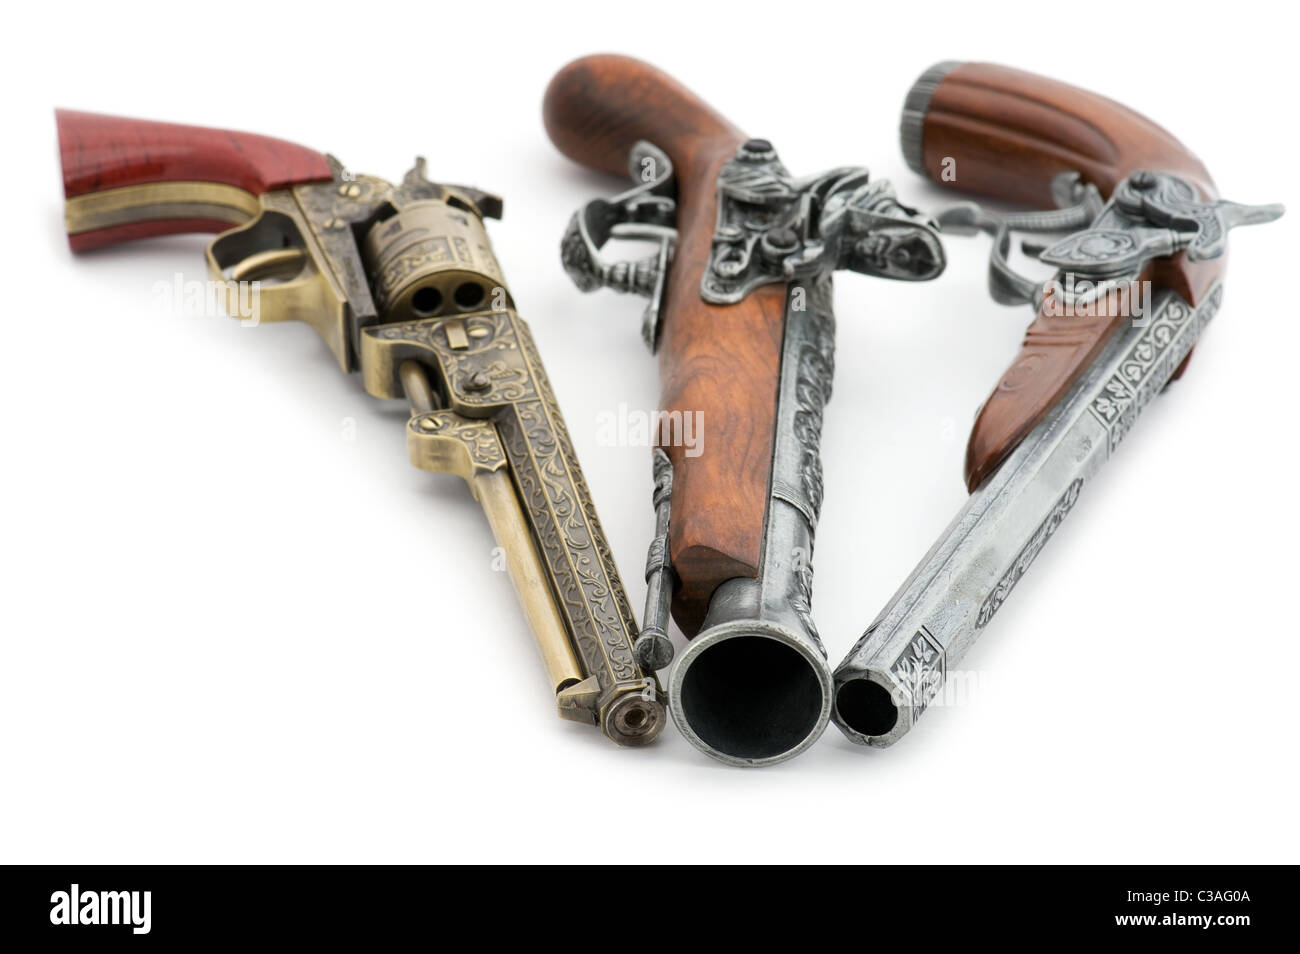 object on white - Gun Lighter close up Stock Photo